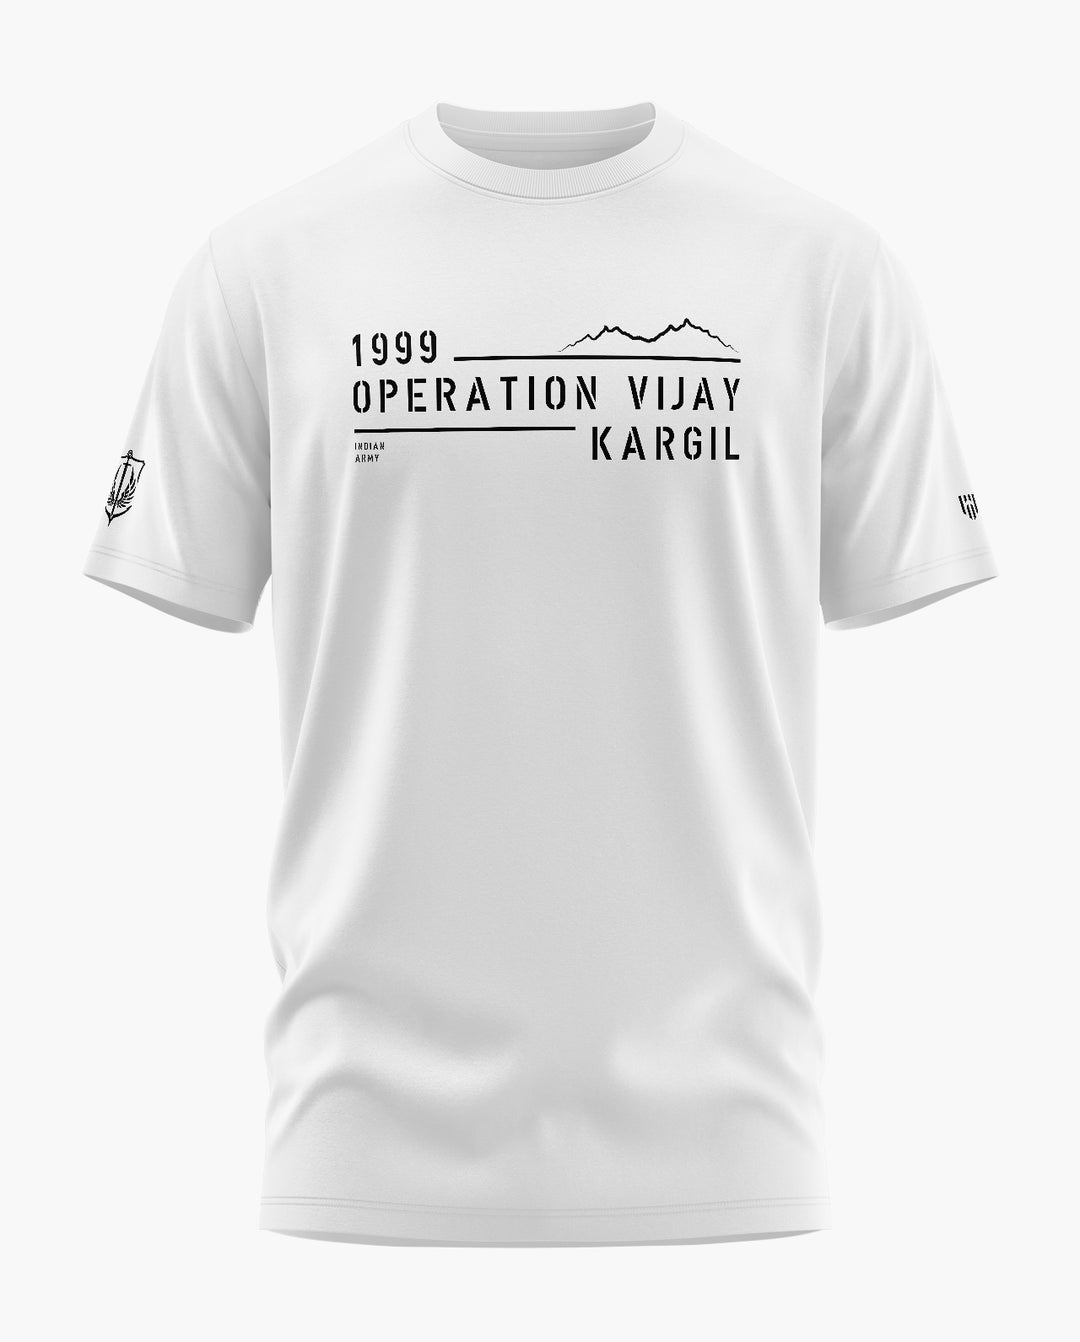 OPERATION VIJAY KARGIL T-Shirt